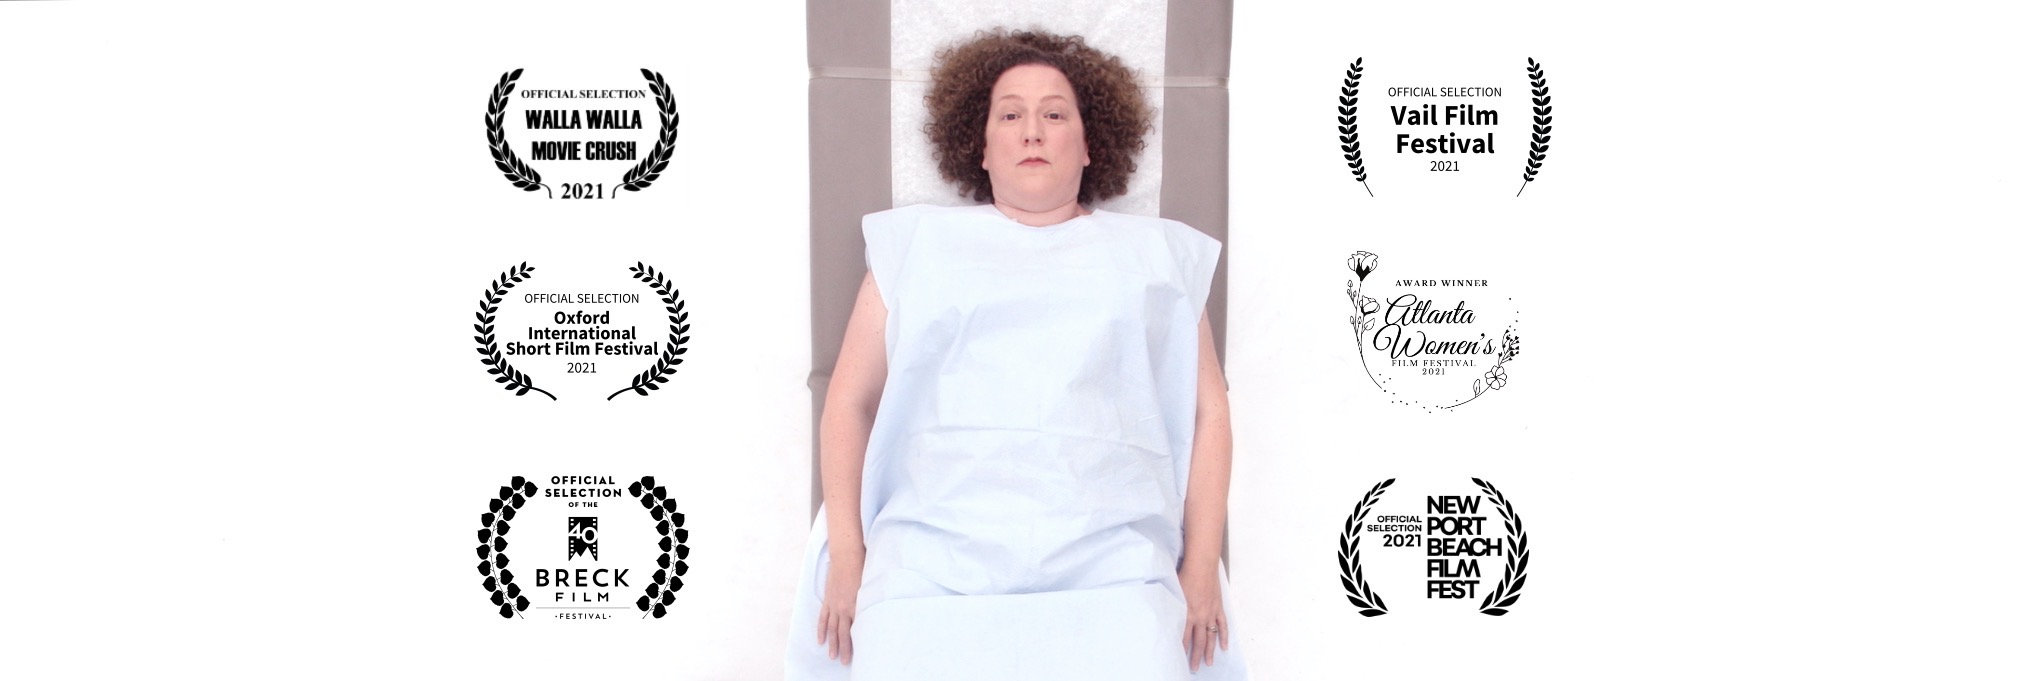 Test (the IVF Film)